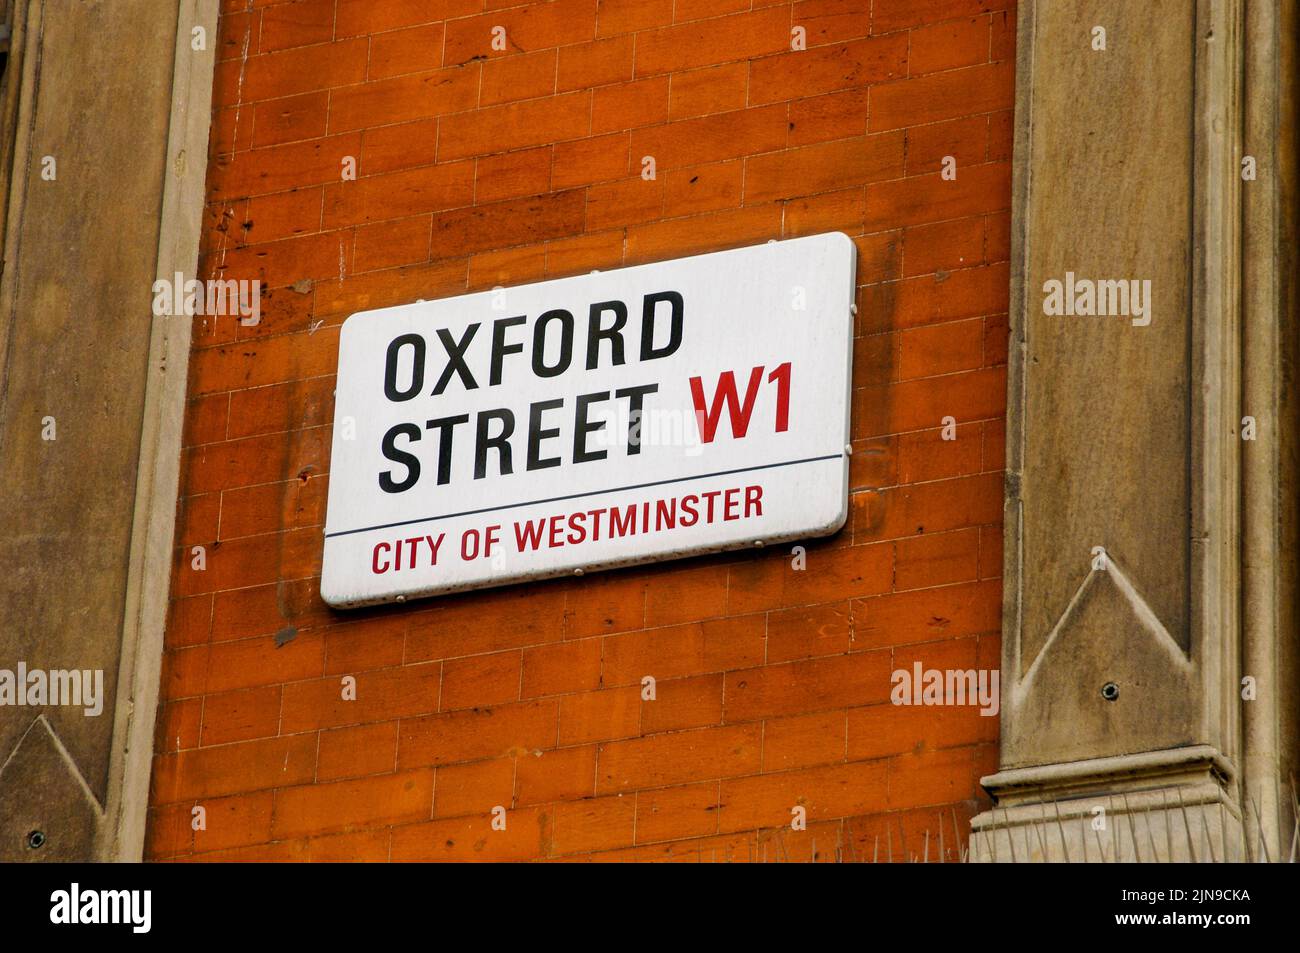 oxford street, london W1 road sign on wall, London, England,UK Stock Photo